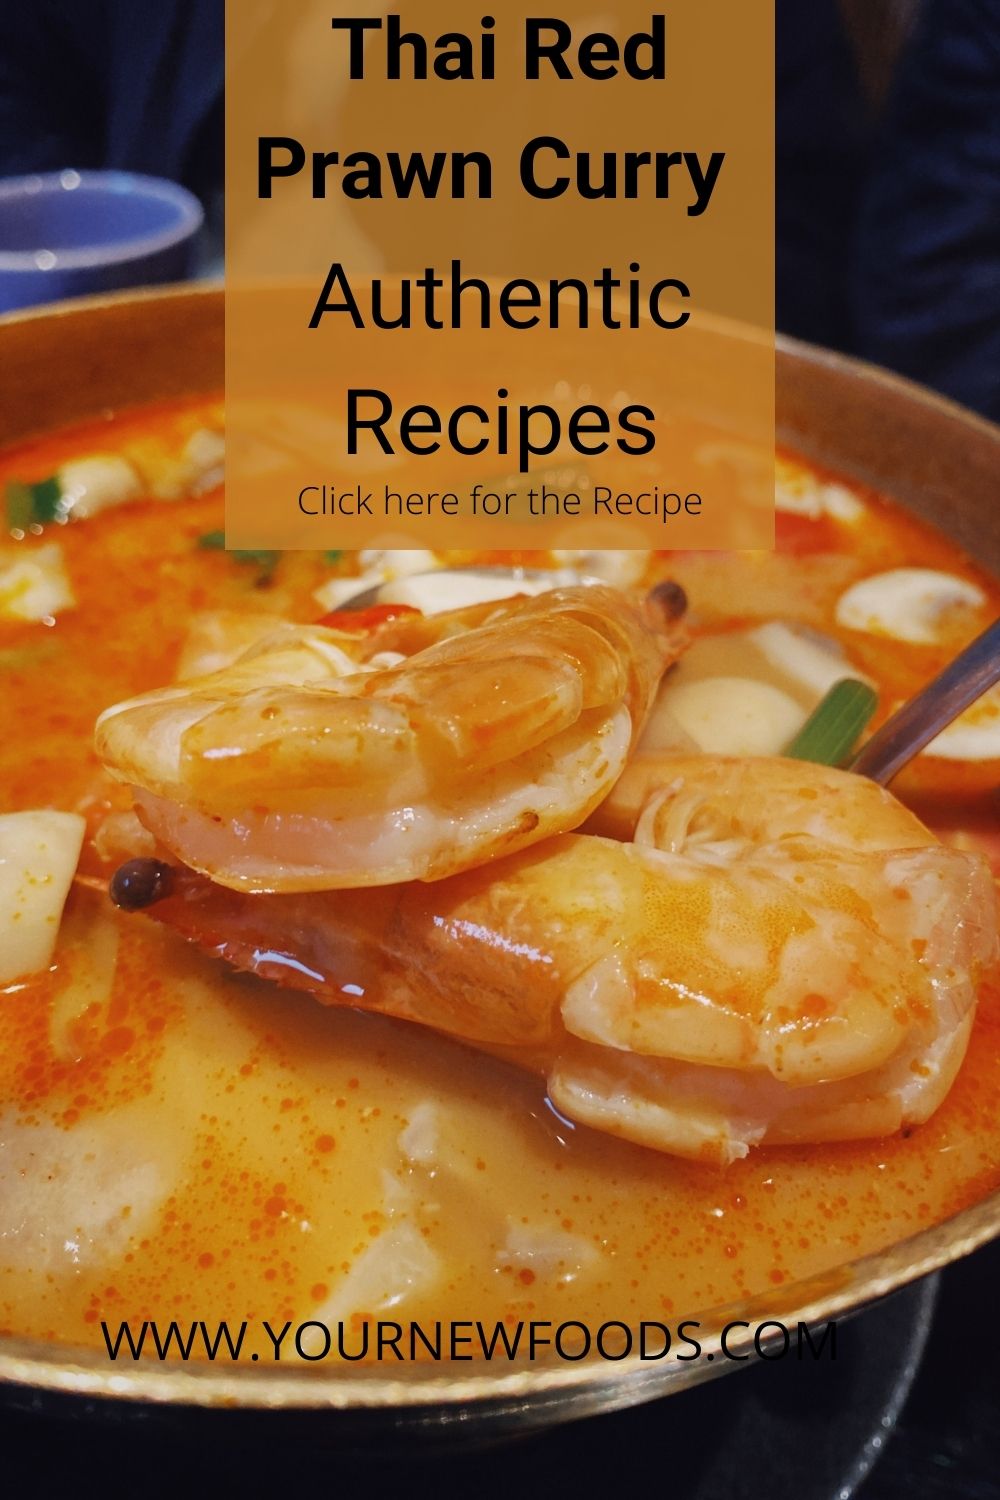 Thai Red Prawn Curry recipe advert